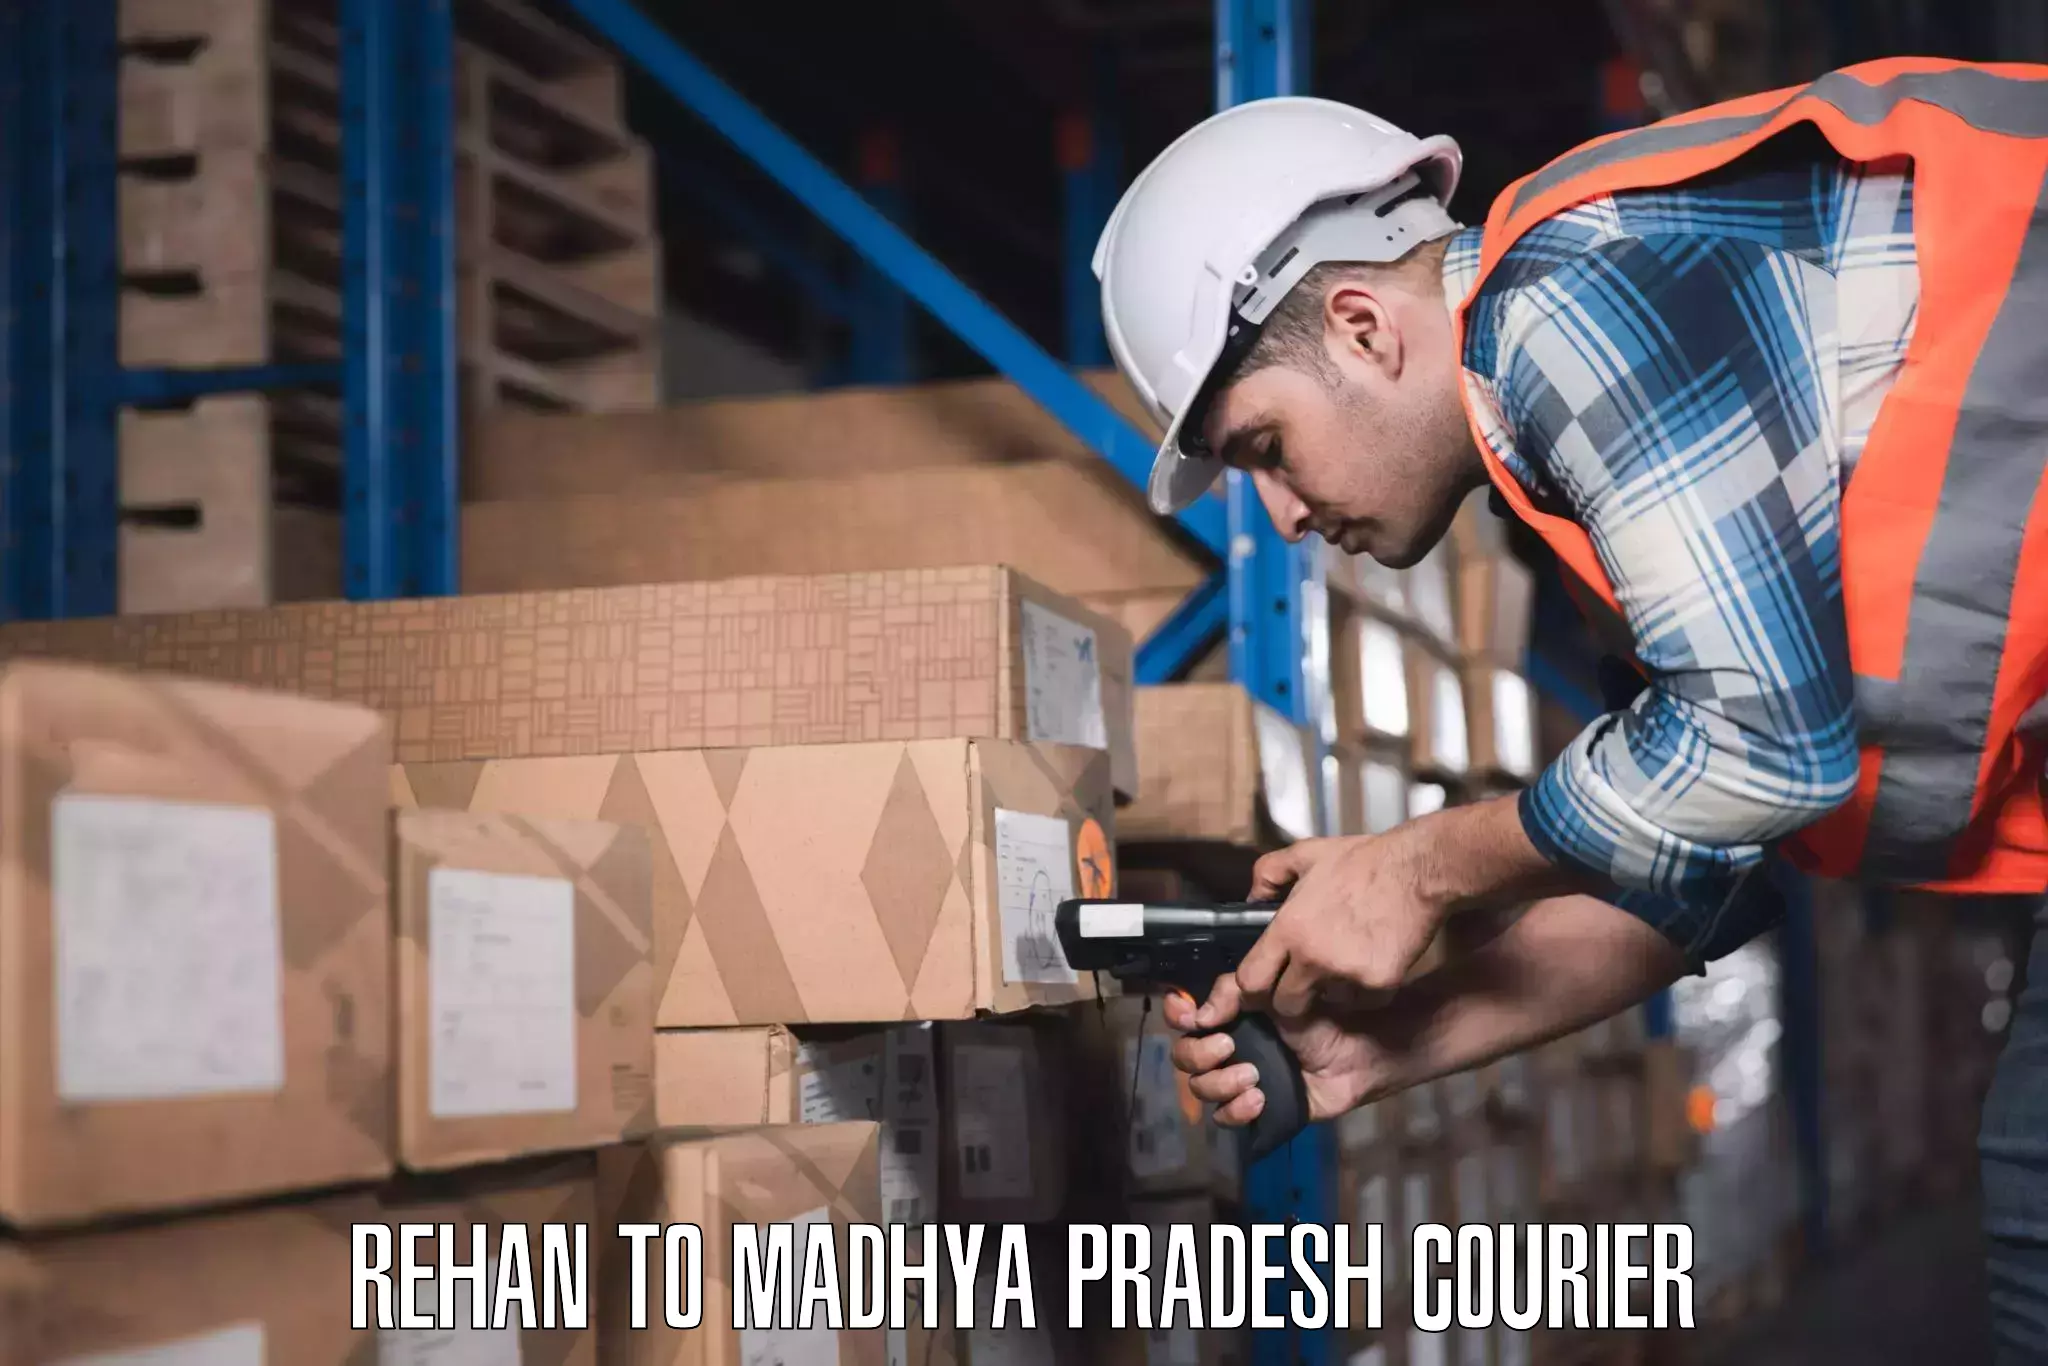 Luggage shipment processing Rehan to Madhya Pradesh